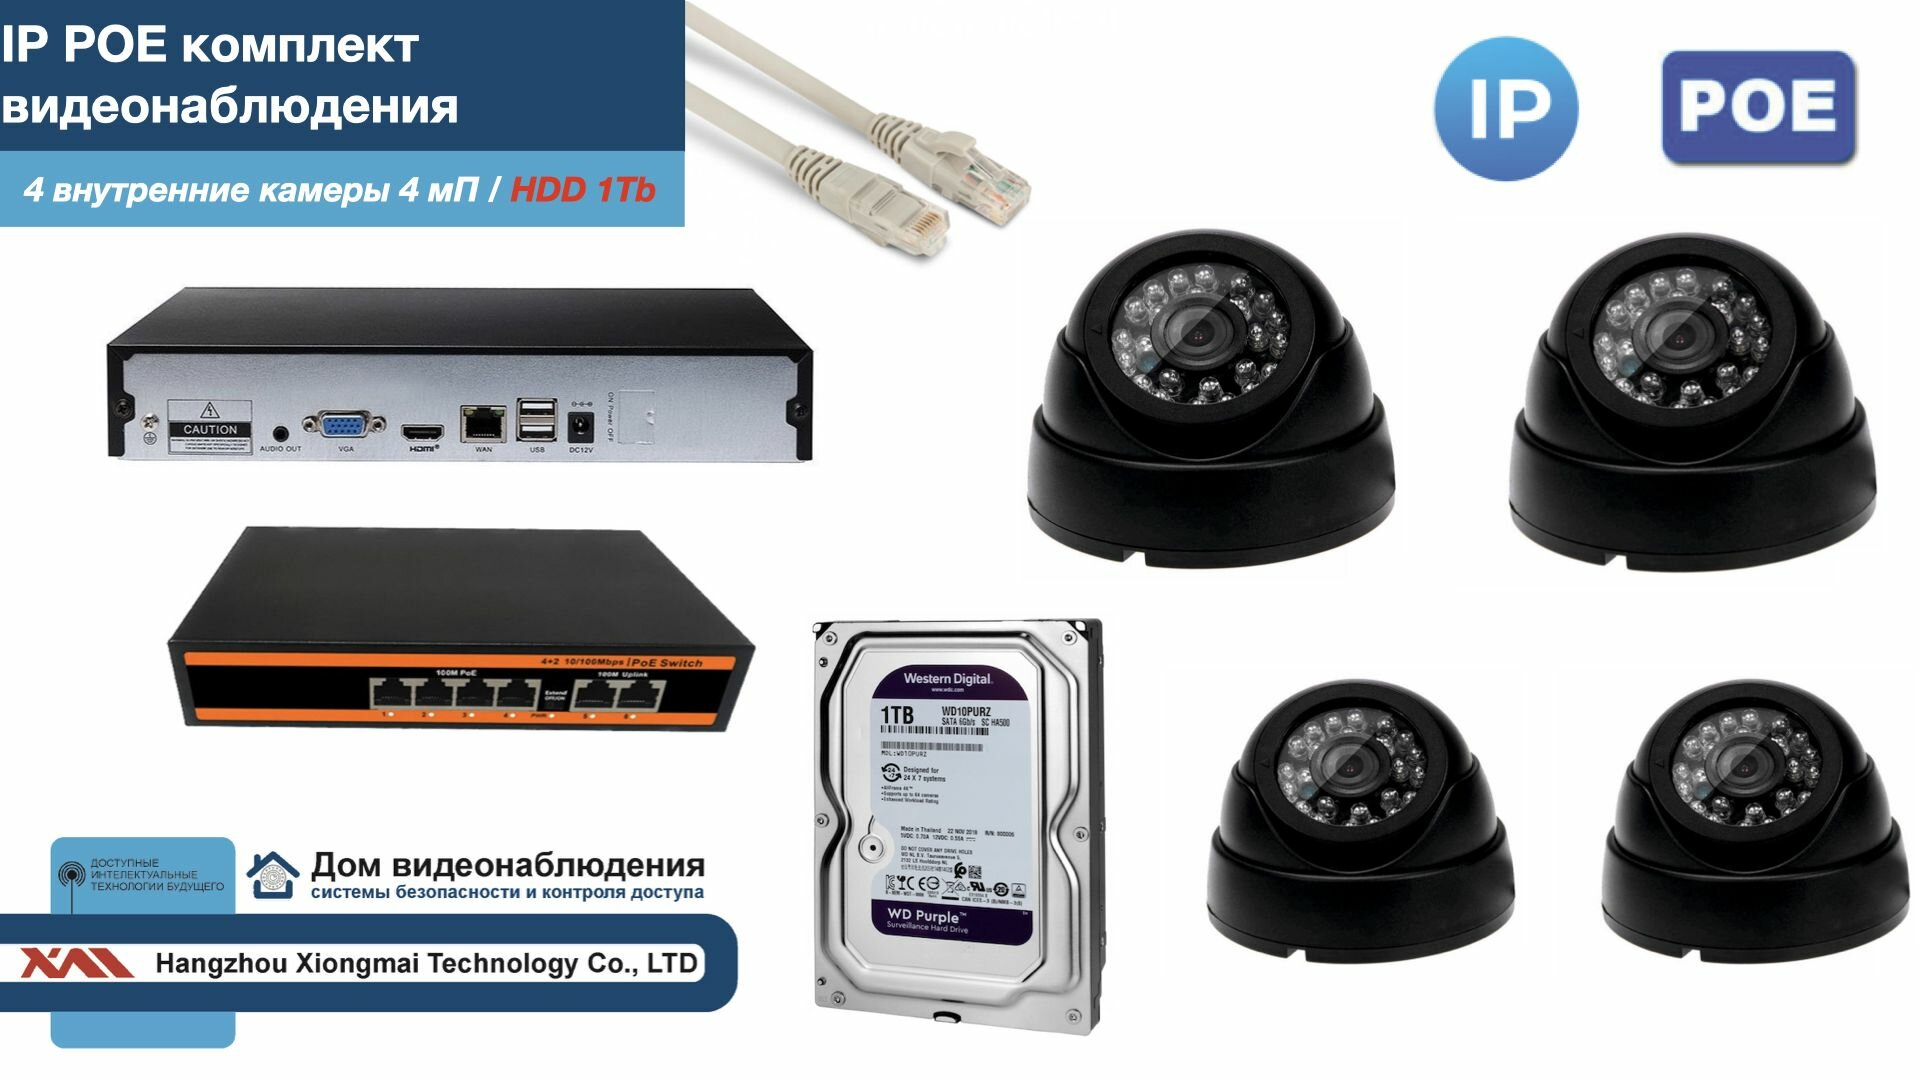 Полный IP POE комплект видеонаблюдения на 4 камеры (KIT4IPPOE300B4MP-HDD1Tb)